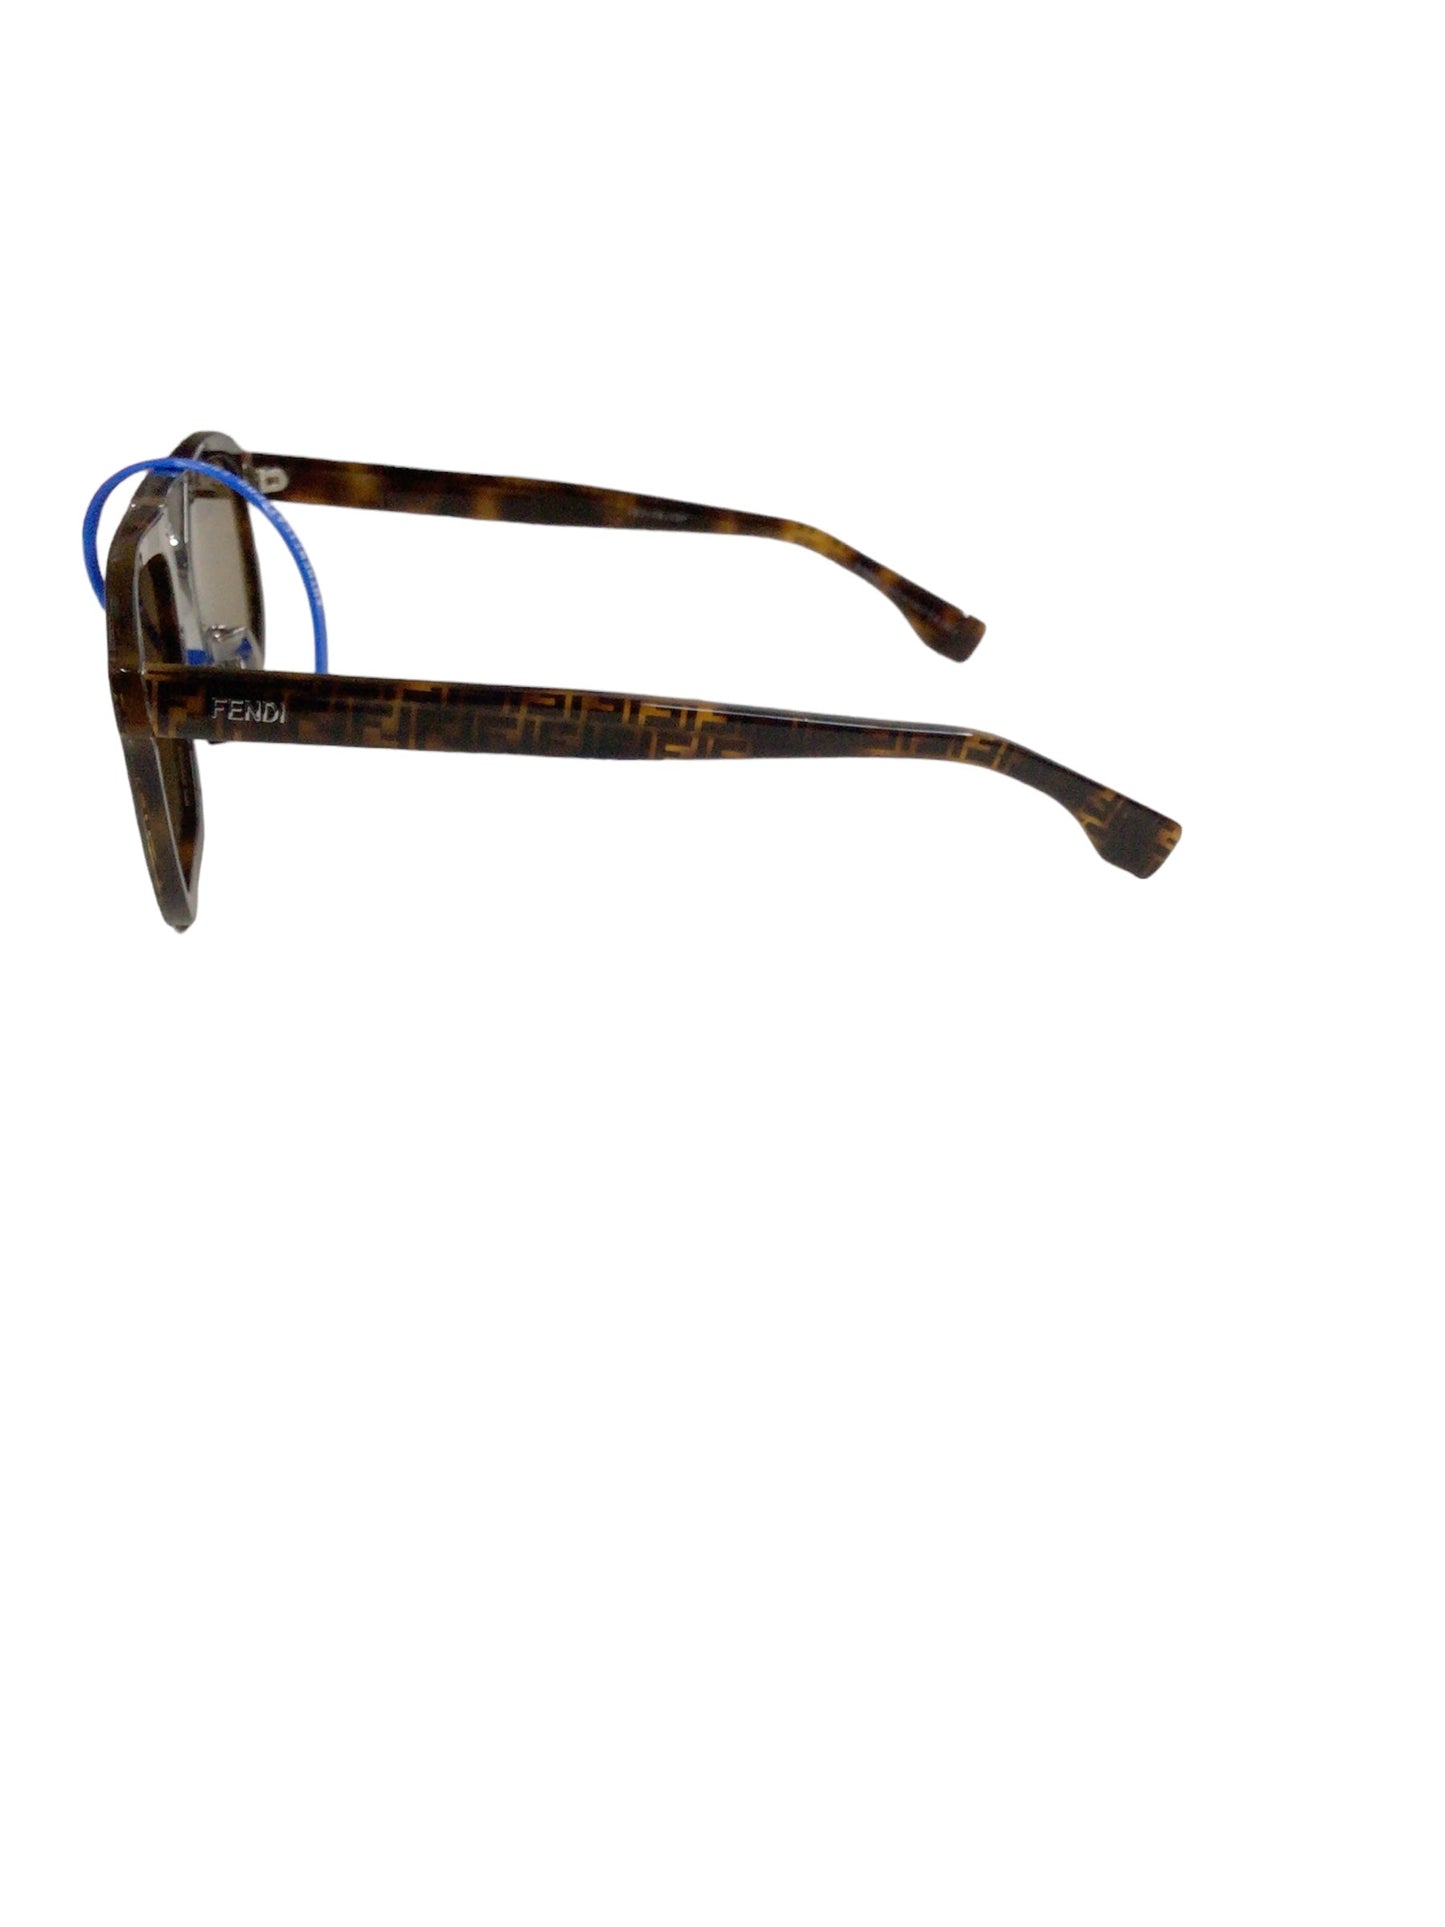 Sunglasses Luxury Designer By Fendi